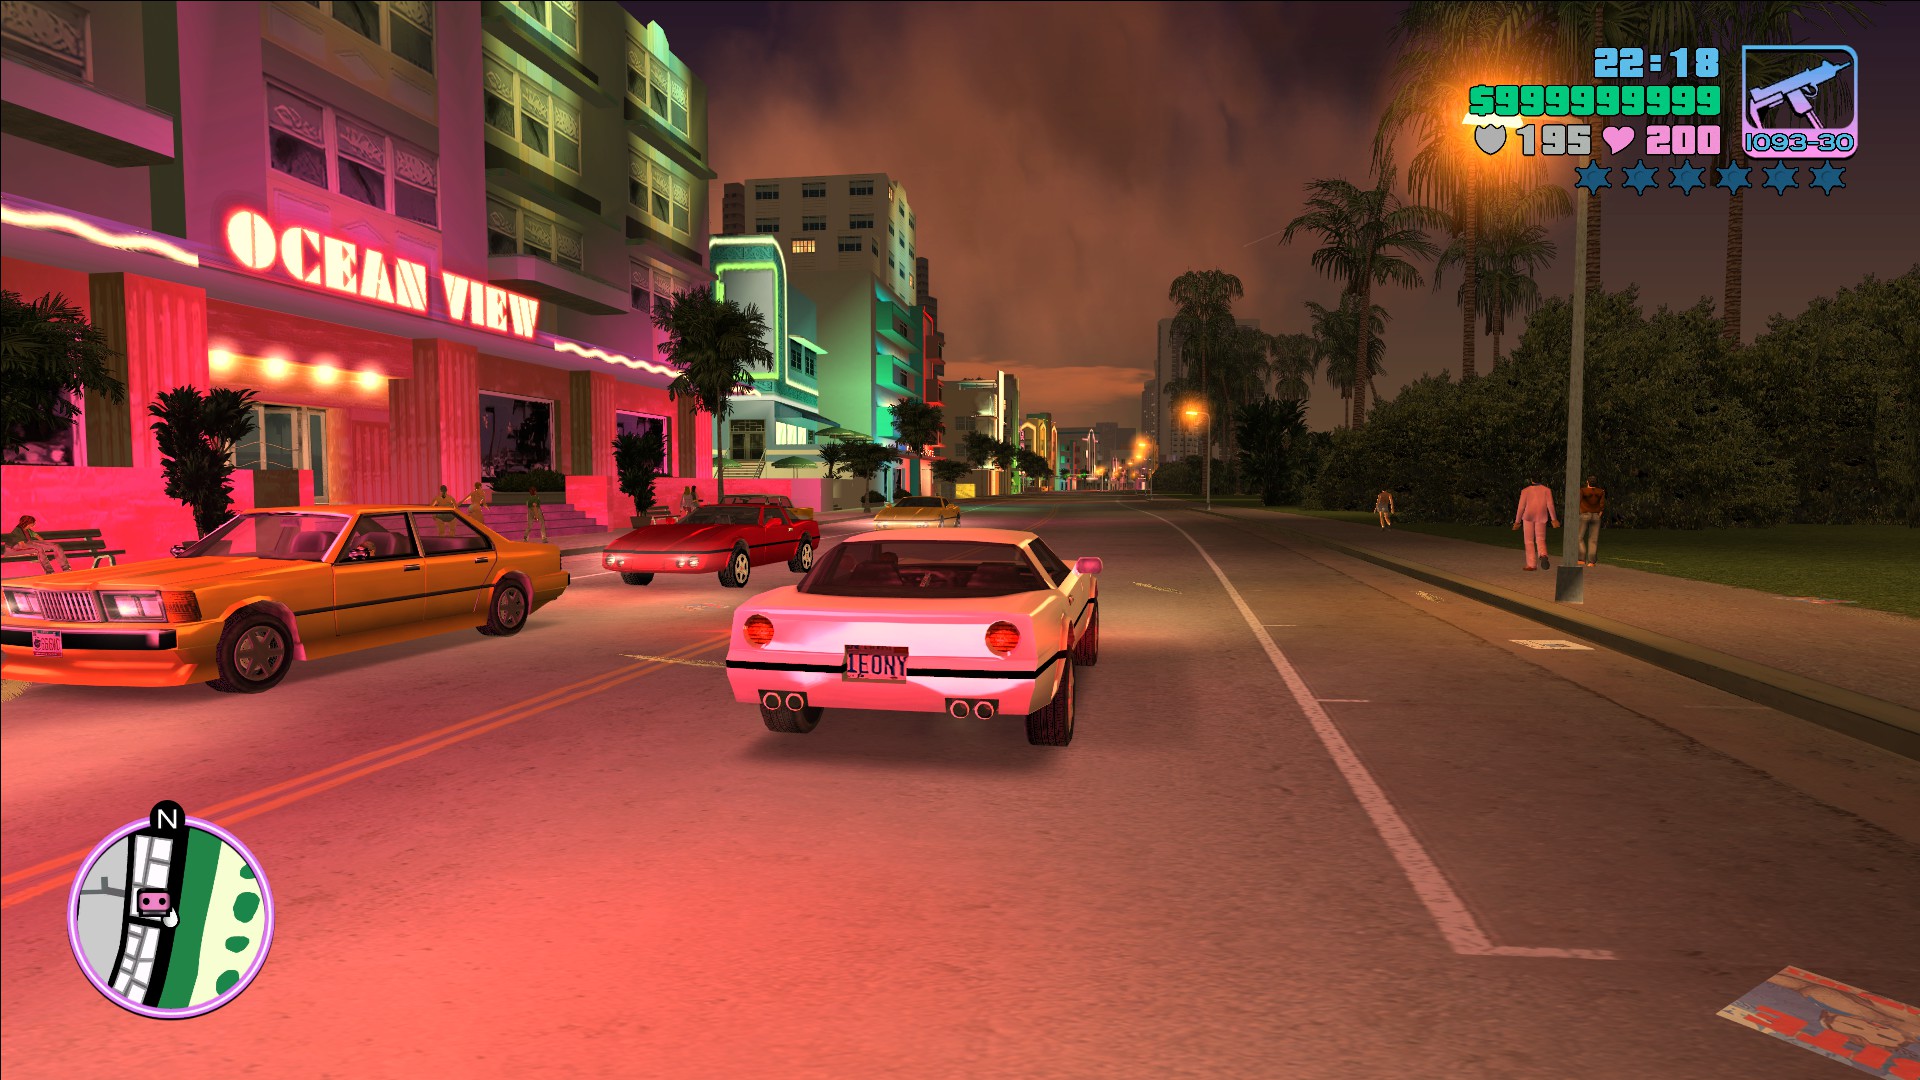 Steam Community :: Guide :: Grand Theft Auto: Vice City – Definitive Edition